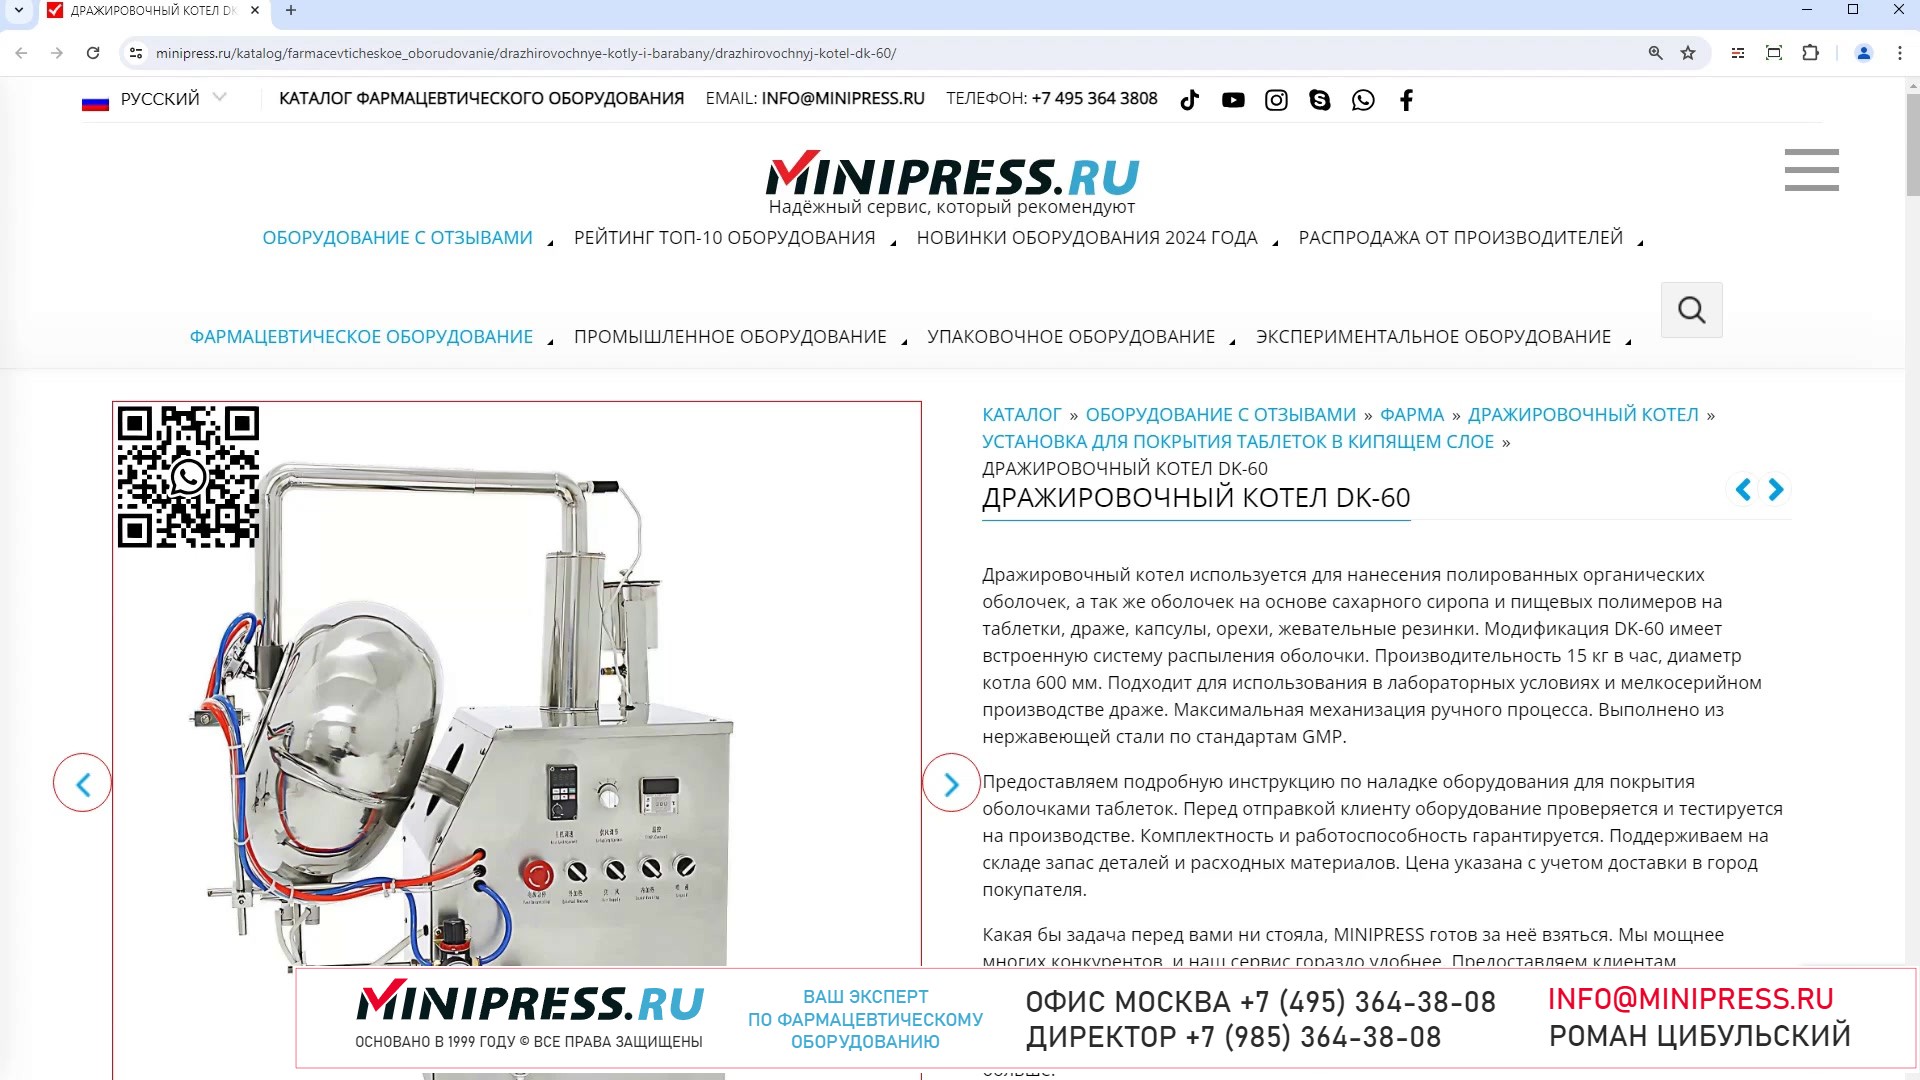 Minipress.ru Дражировочный котел DK-60